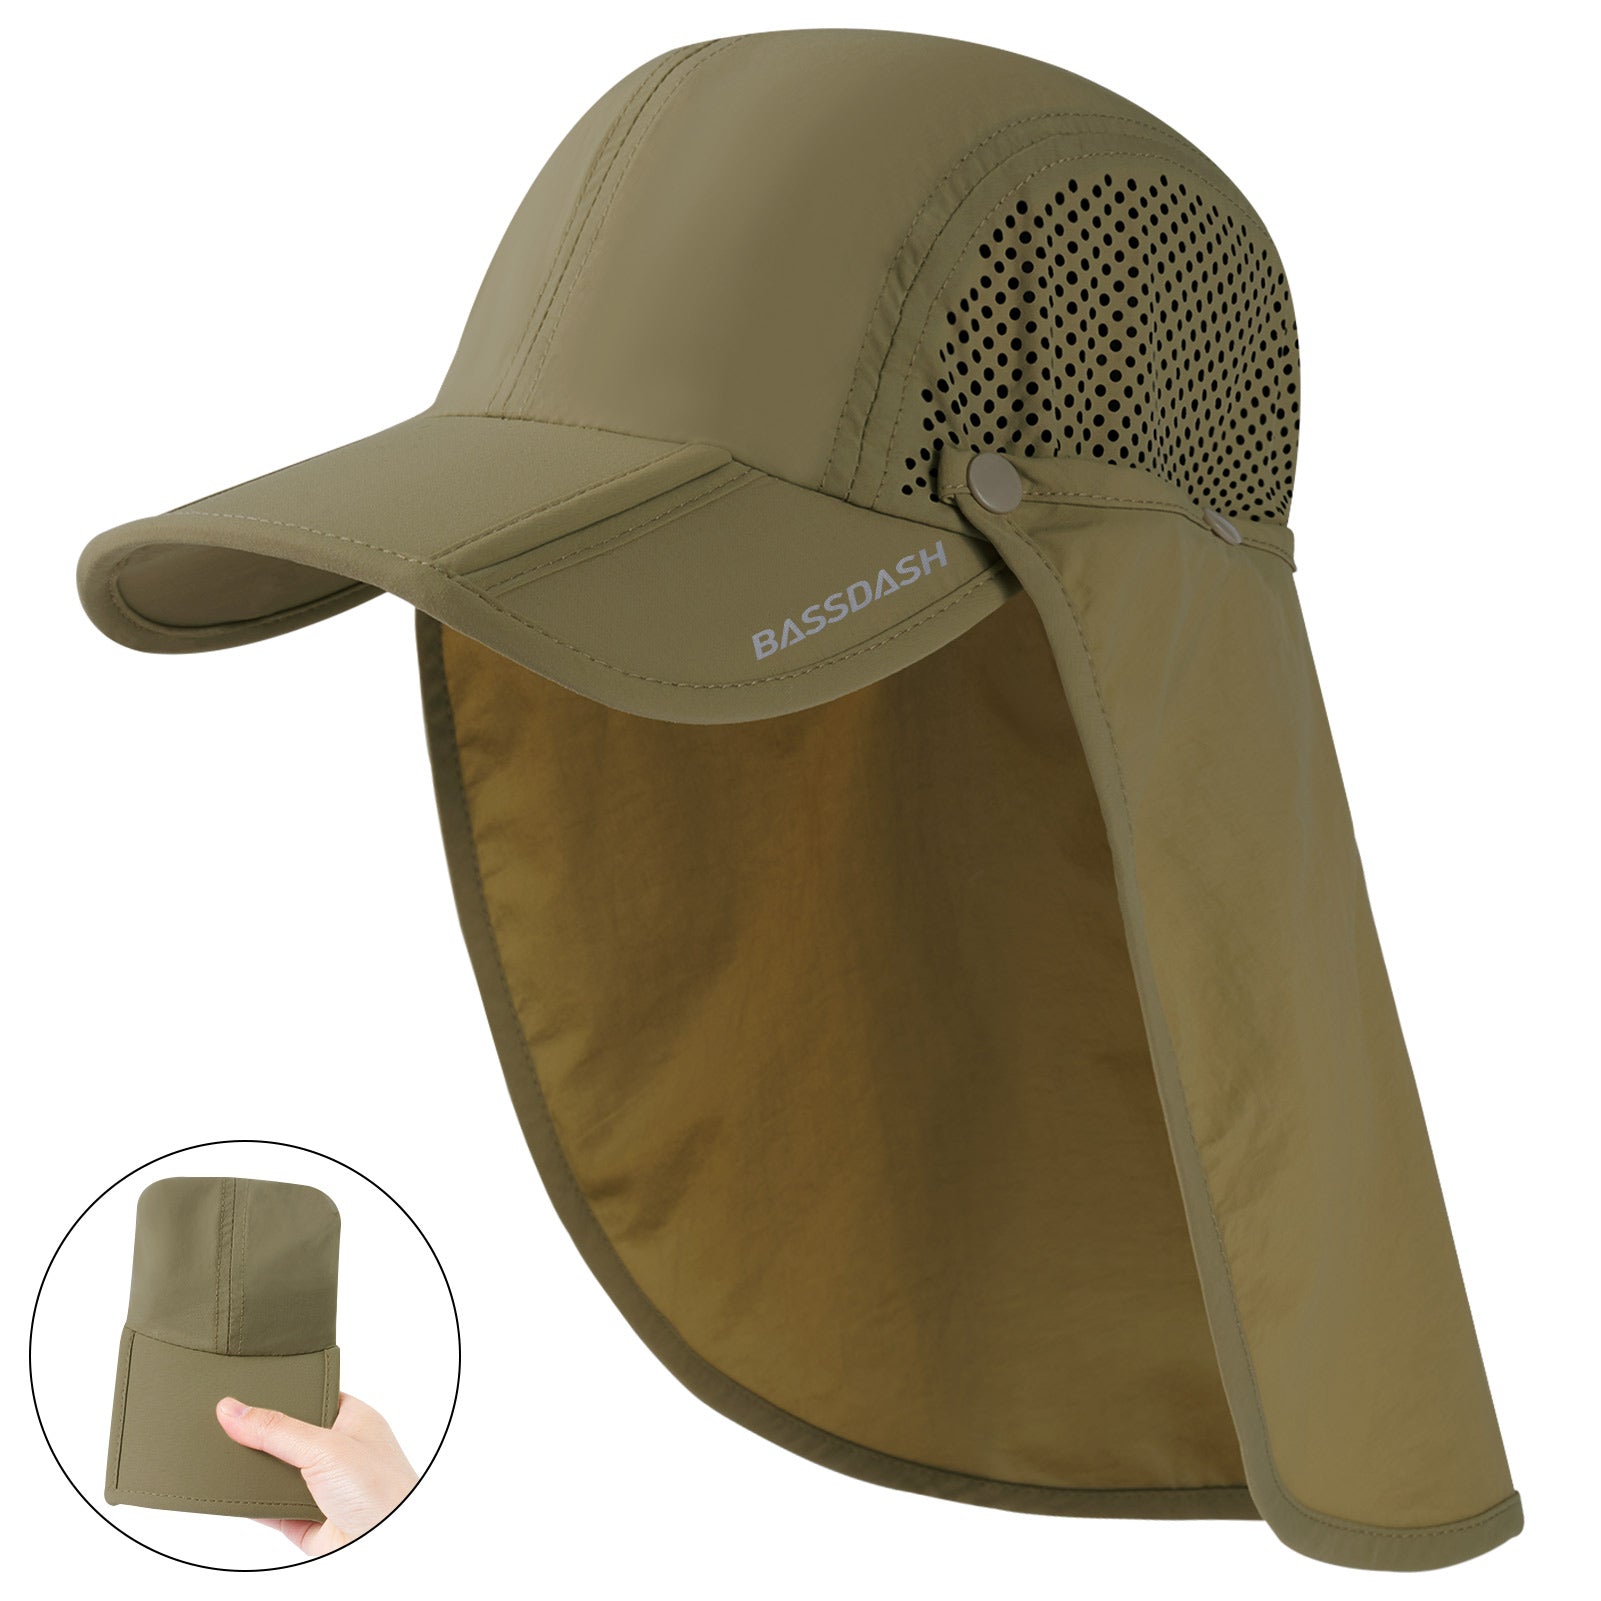 Bassdash Foldable UPF 50+ Fishing Hats with Removable Neck Flap Fh12, Khaki with Foldable Brim / One Size